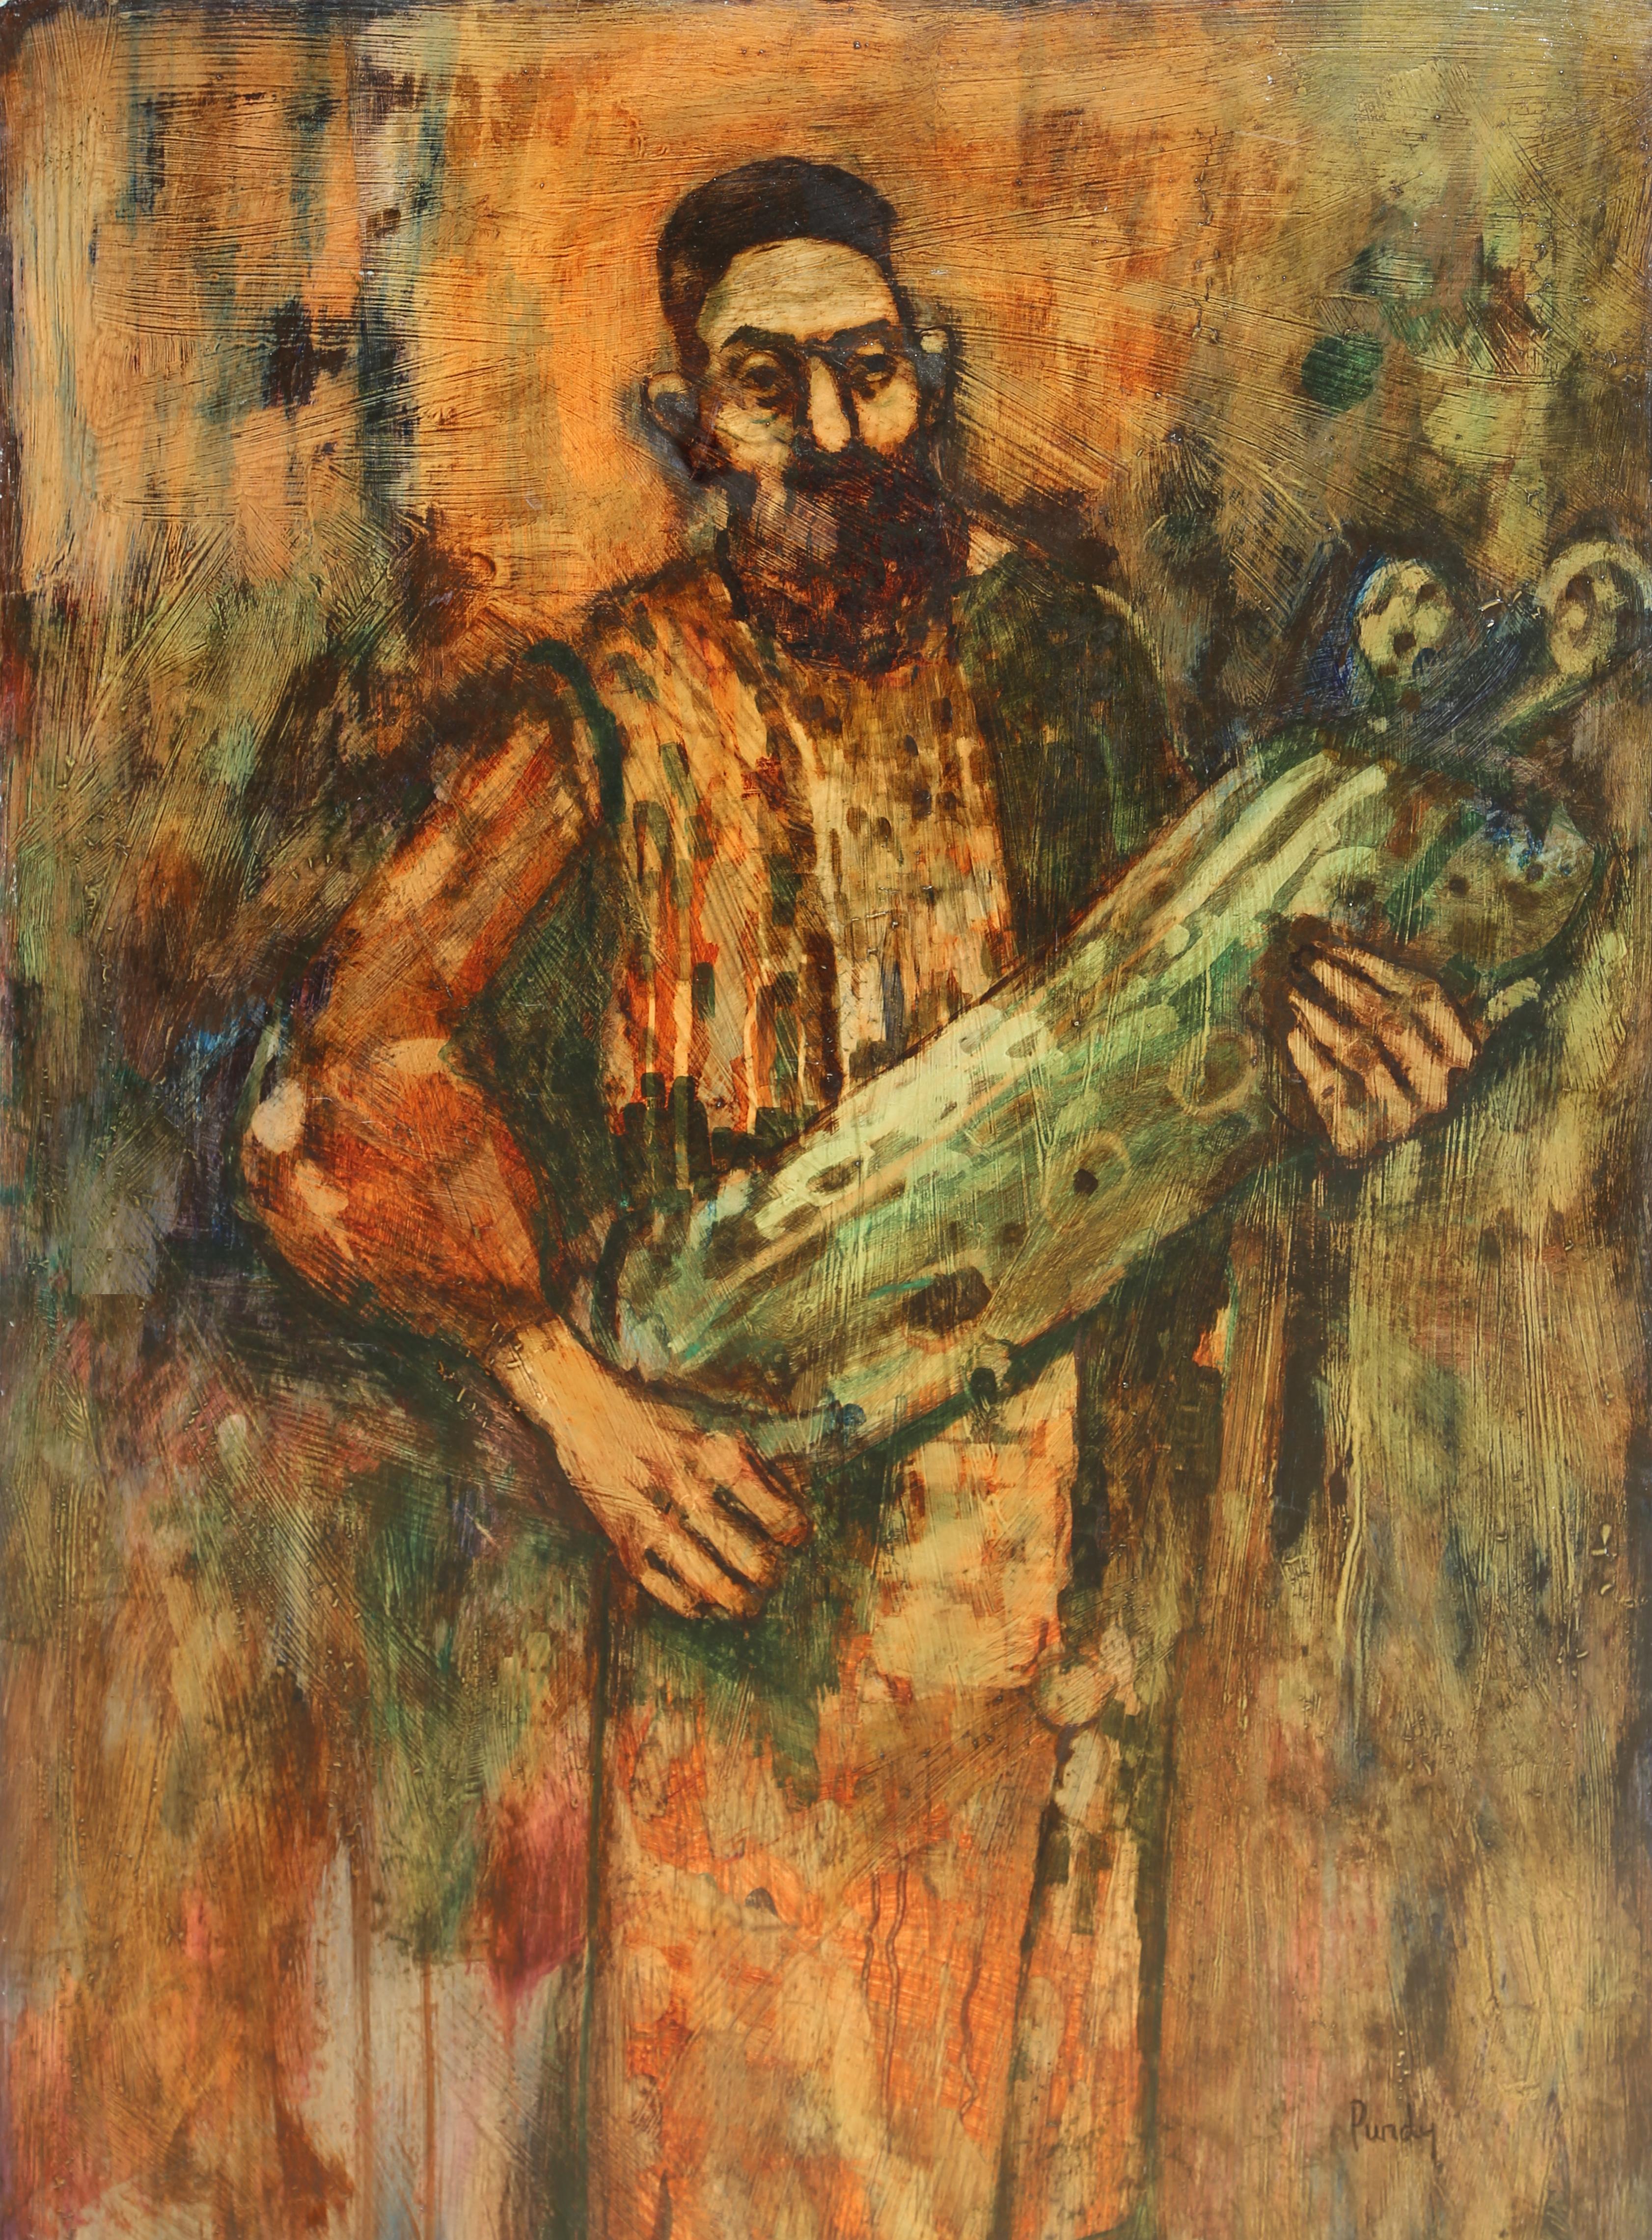 Künstler: Donald Roy Purdy, Amerikaner (1924 - )
Titel: Rabbiner mit Tora
Medium: Öl auf Masonit, signiert v.l.n.r.
Größe: 36 x 24 Zoll (91,44 x 60,96 cm)